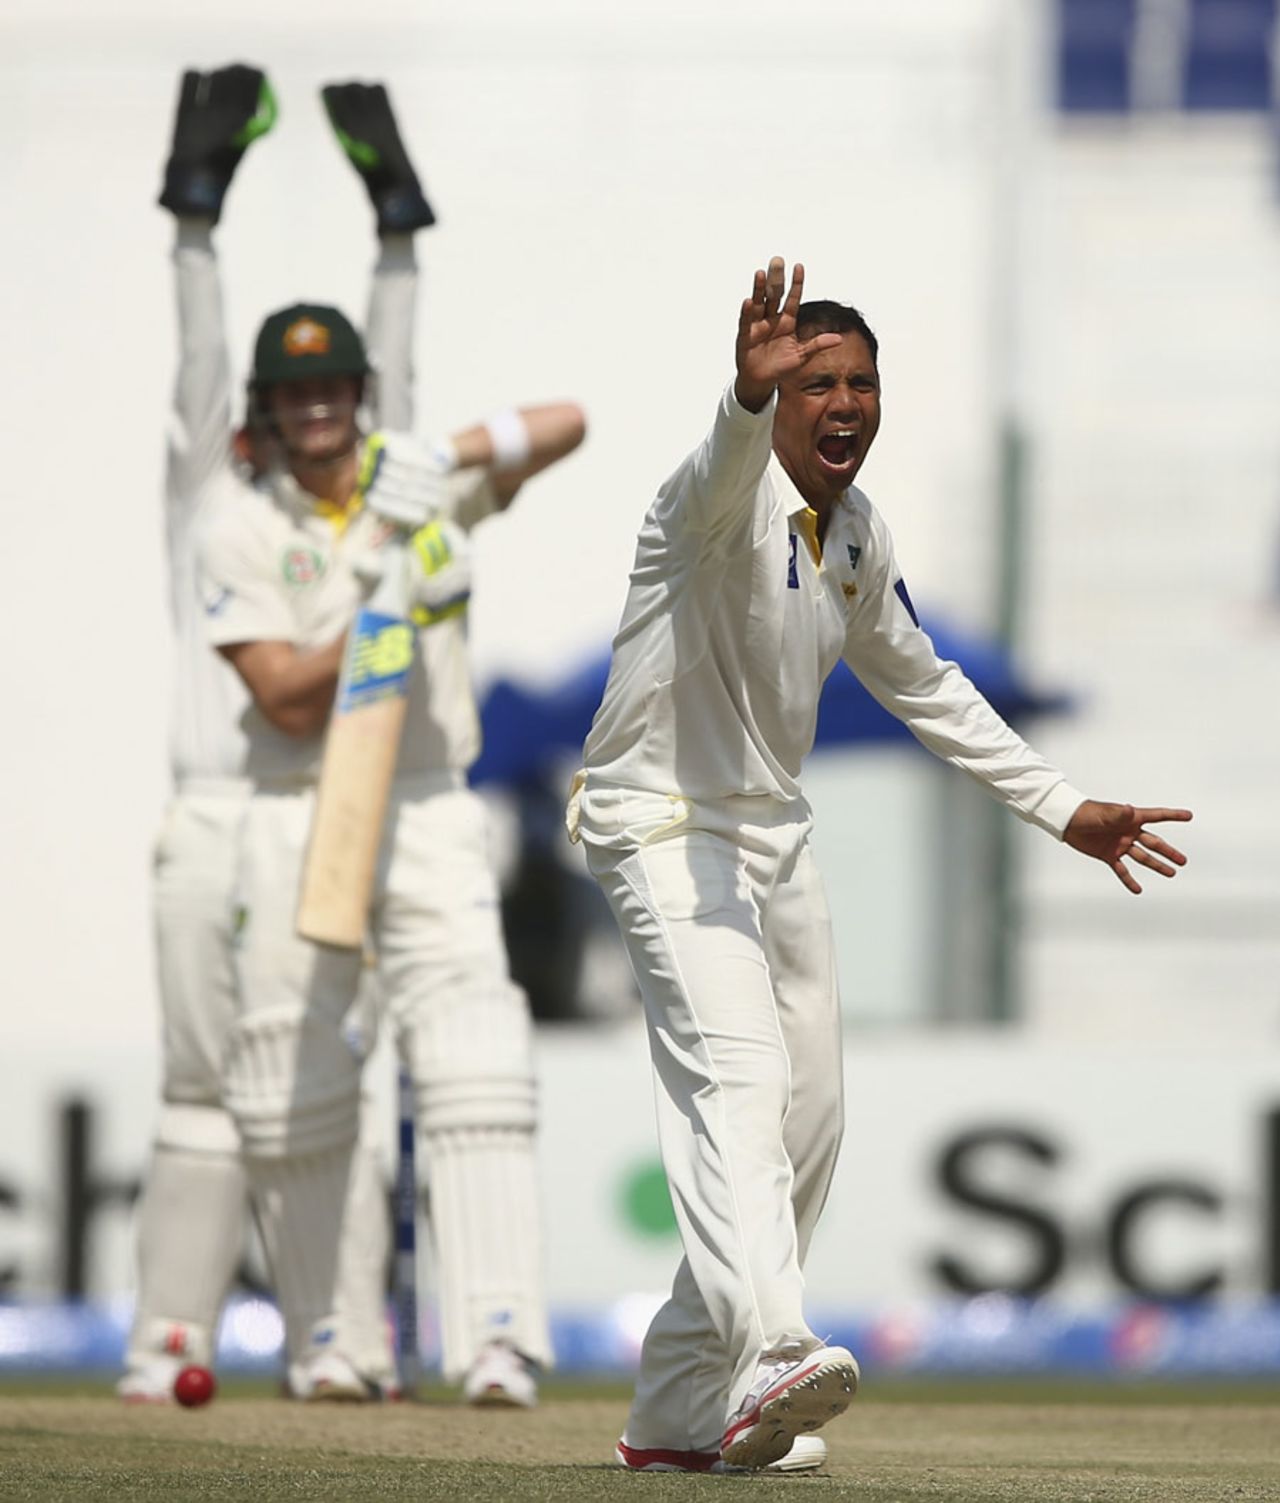 Zulfiqar Babar appeals successfully for an lbw against Steven Smith, Pakistan v Australia, 2nd Test, Abu Dhabi, 3rd day, November 1, 2014